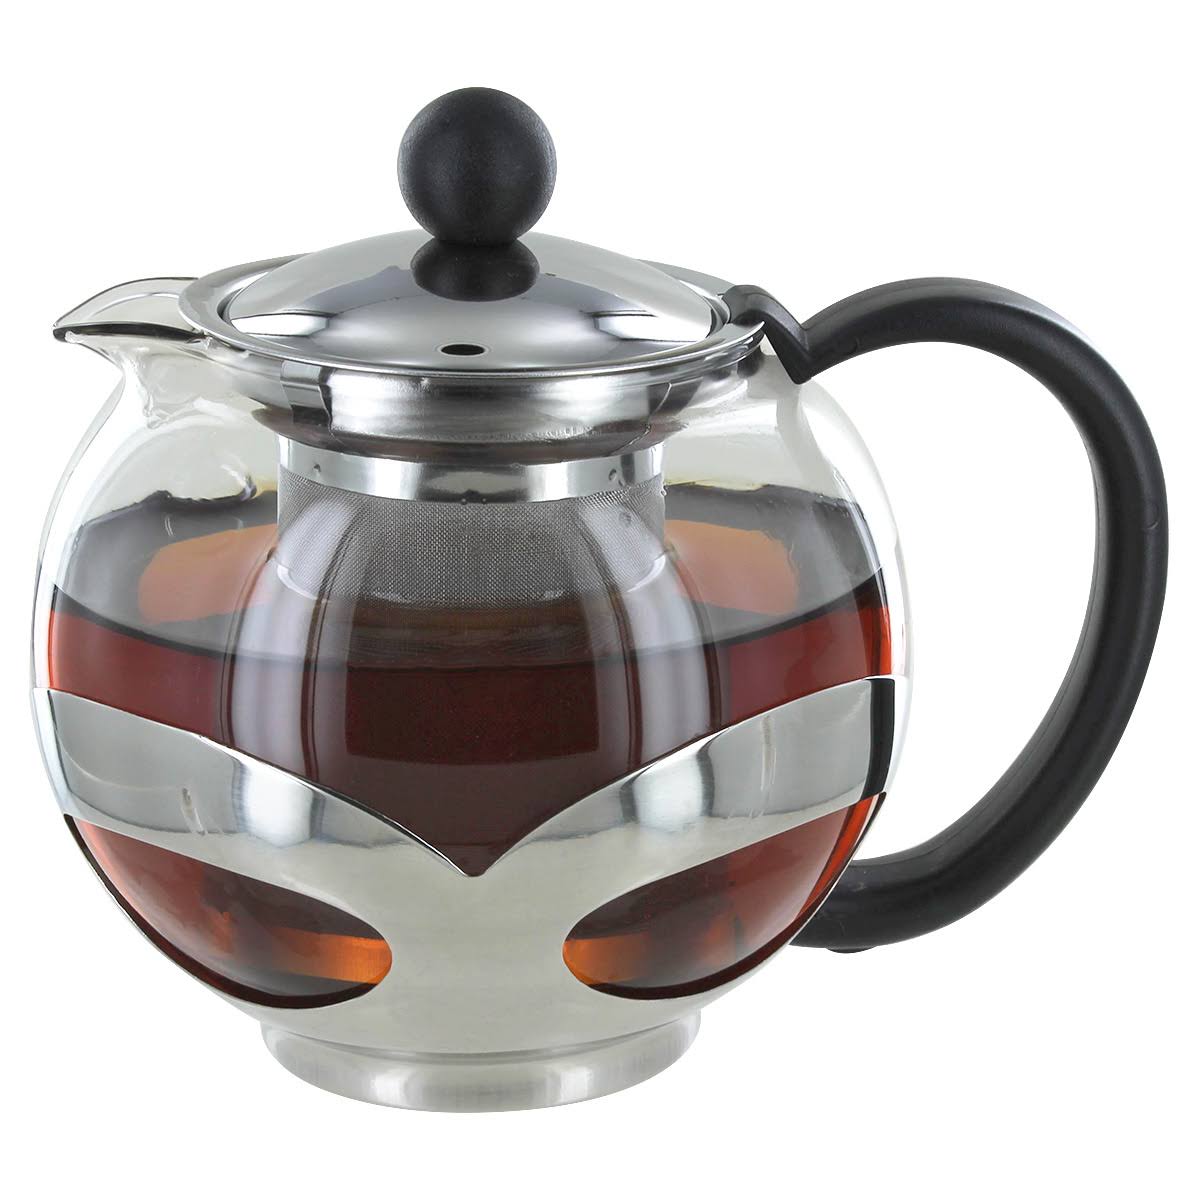 https://www.momjunction.com/wp-content/uploads/product-images/pride-of-india-tempered-glass-teapot_afl2219.jpg